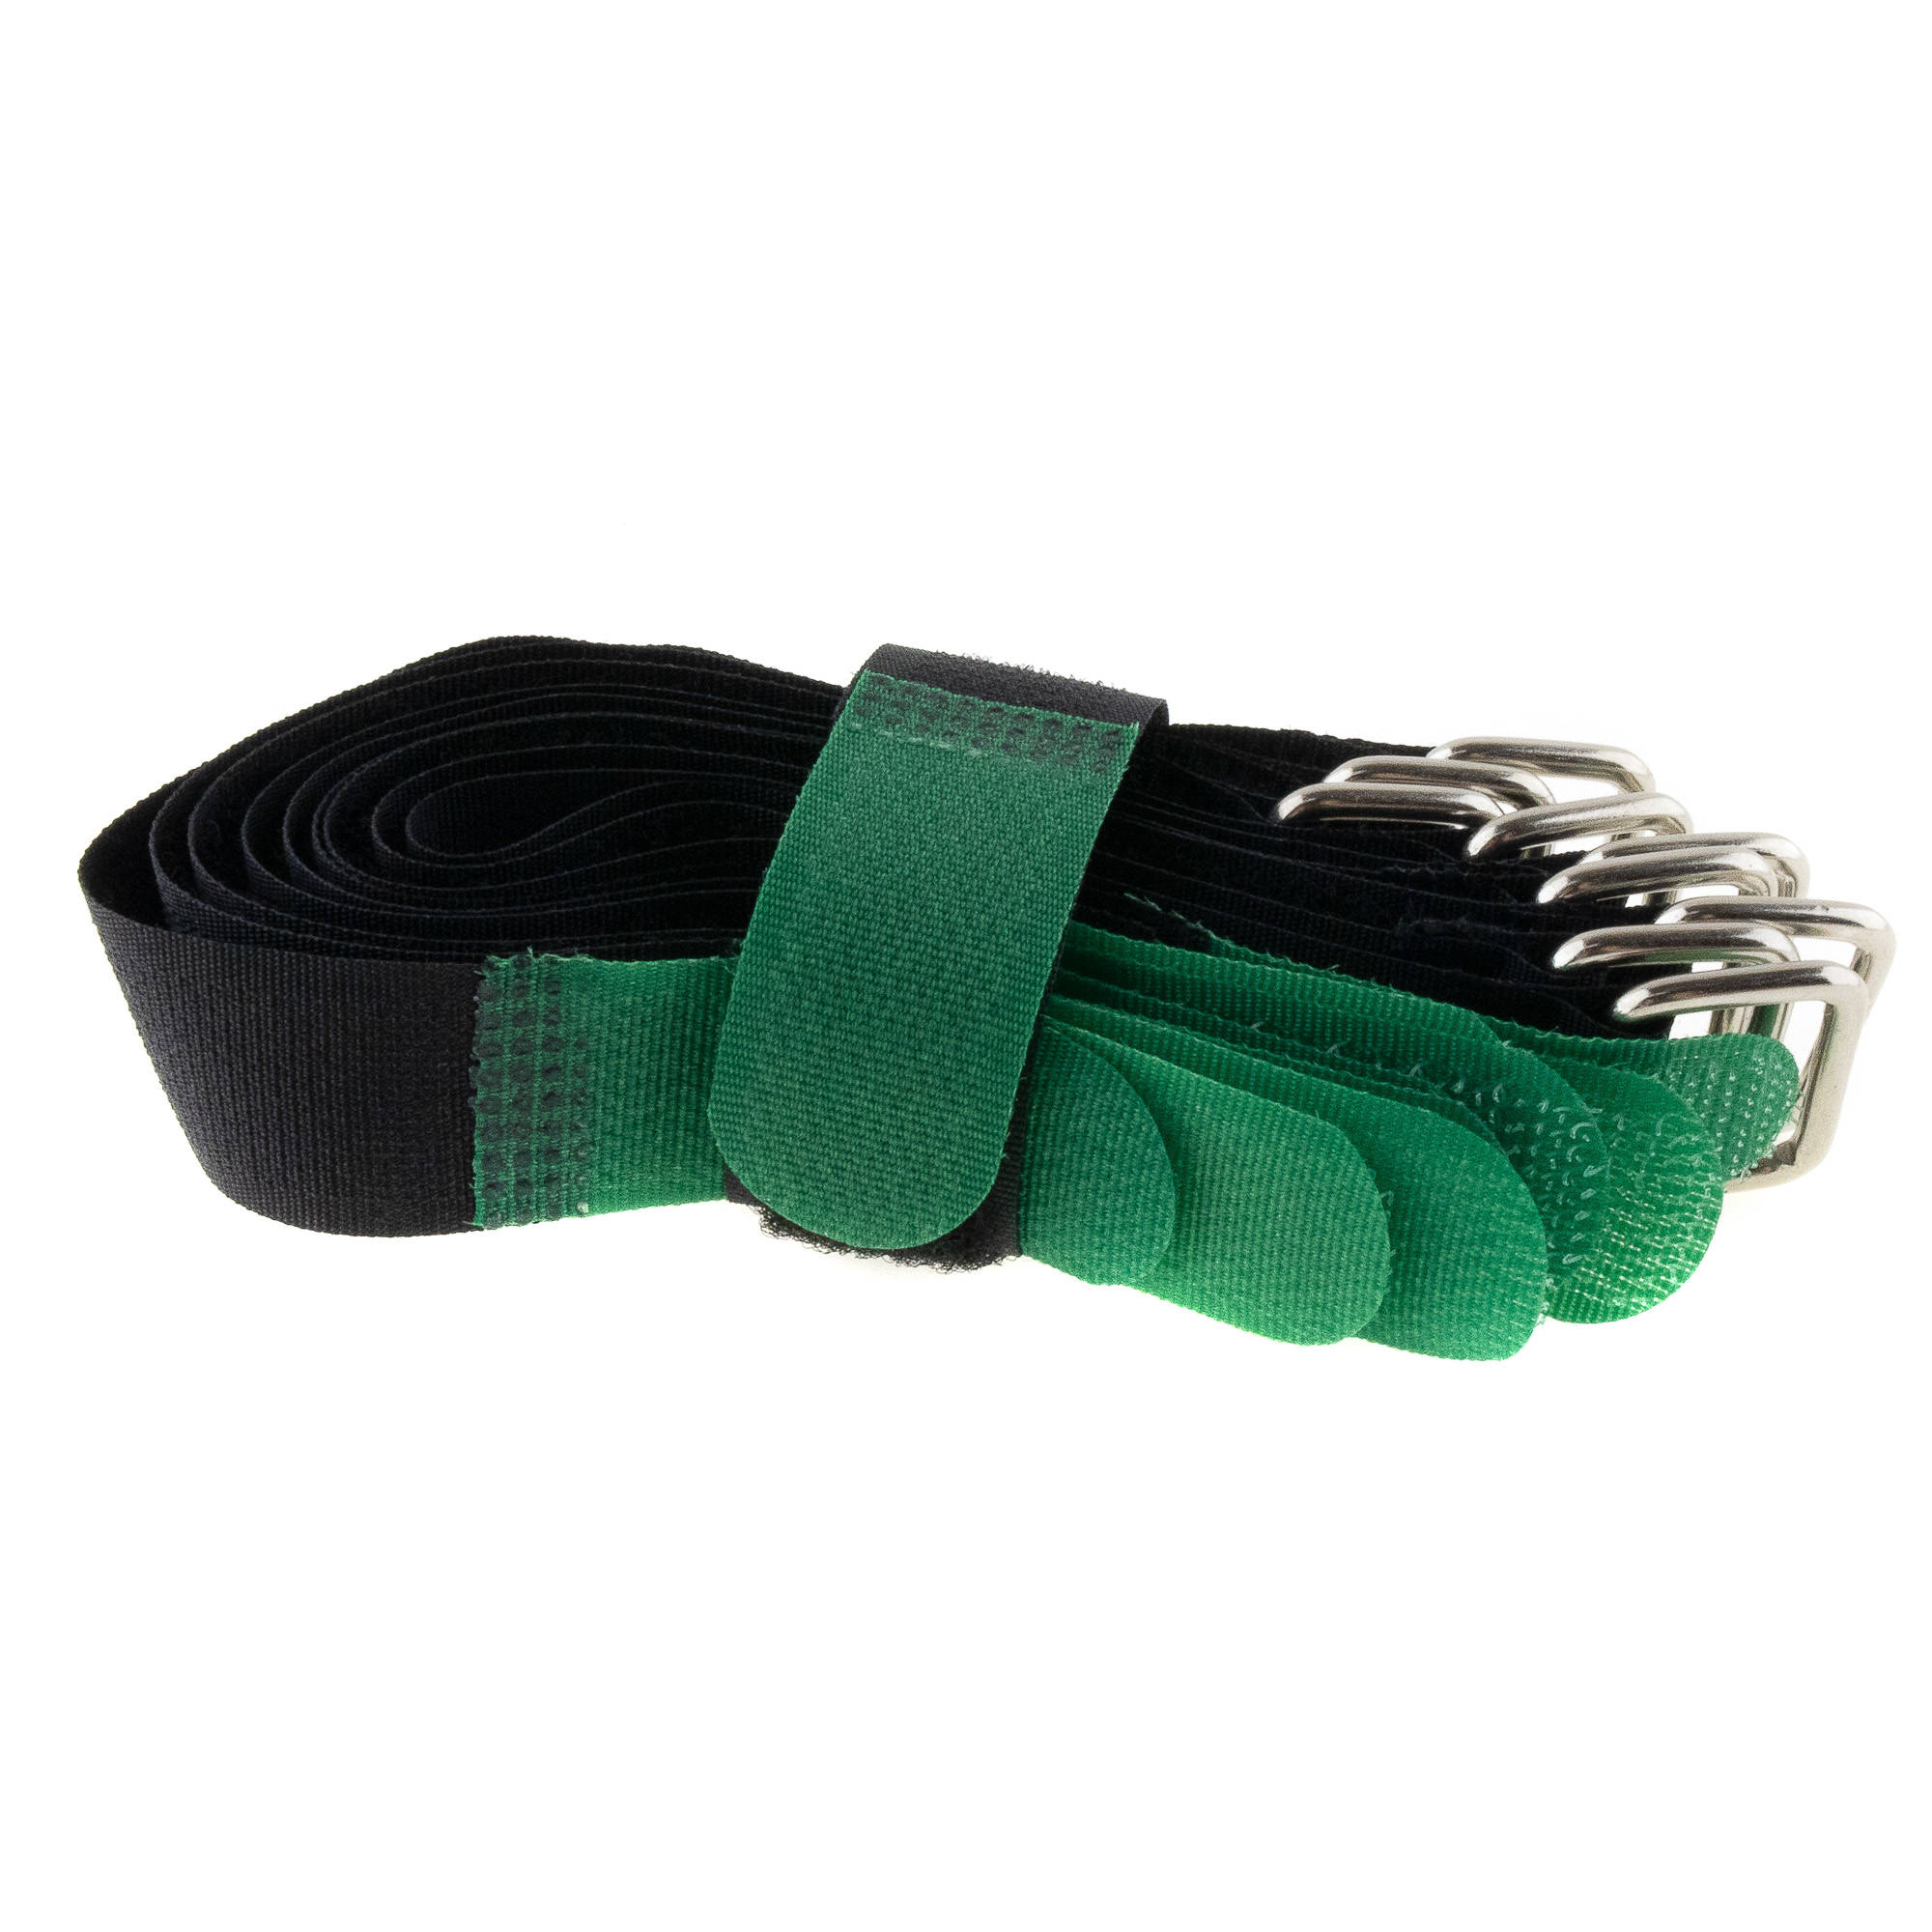 Hook-and-loop strap 200x20, black/green, 10PCS